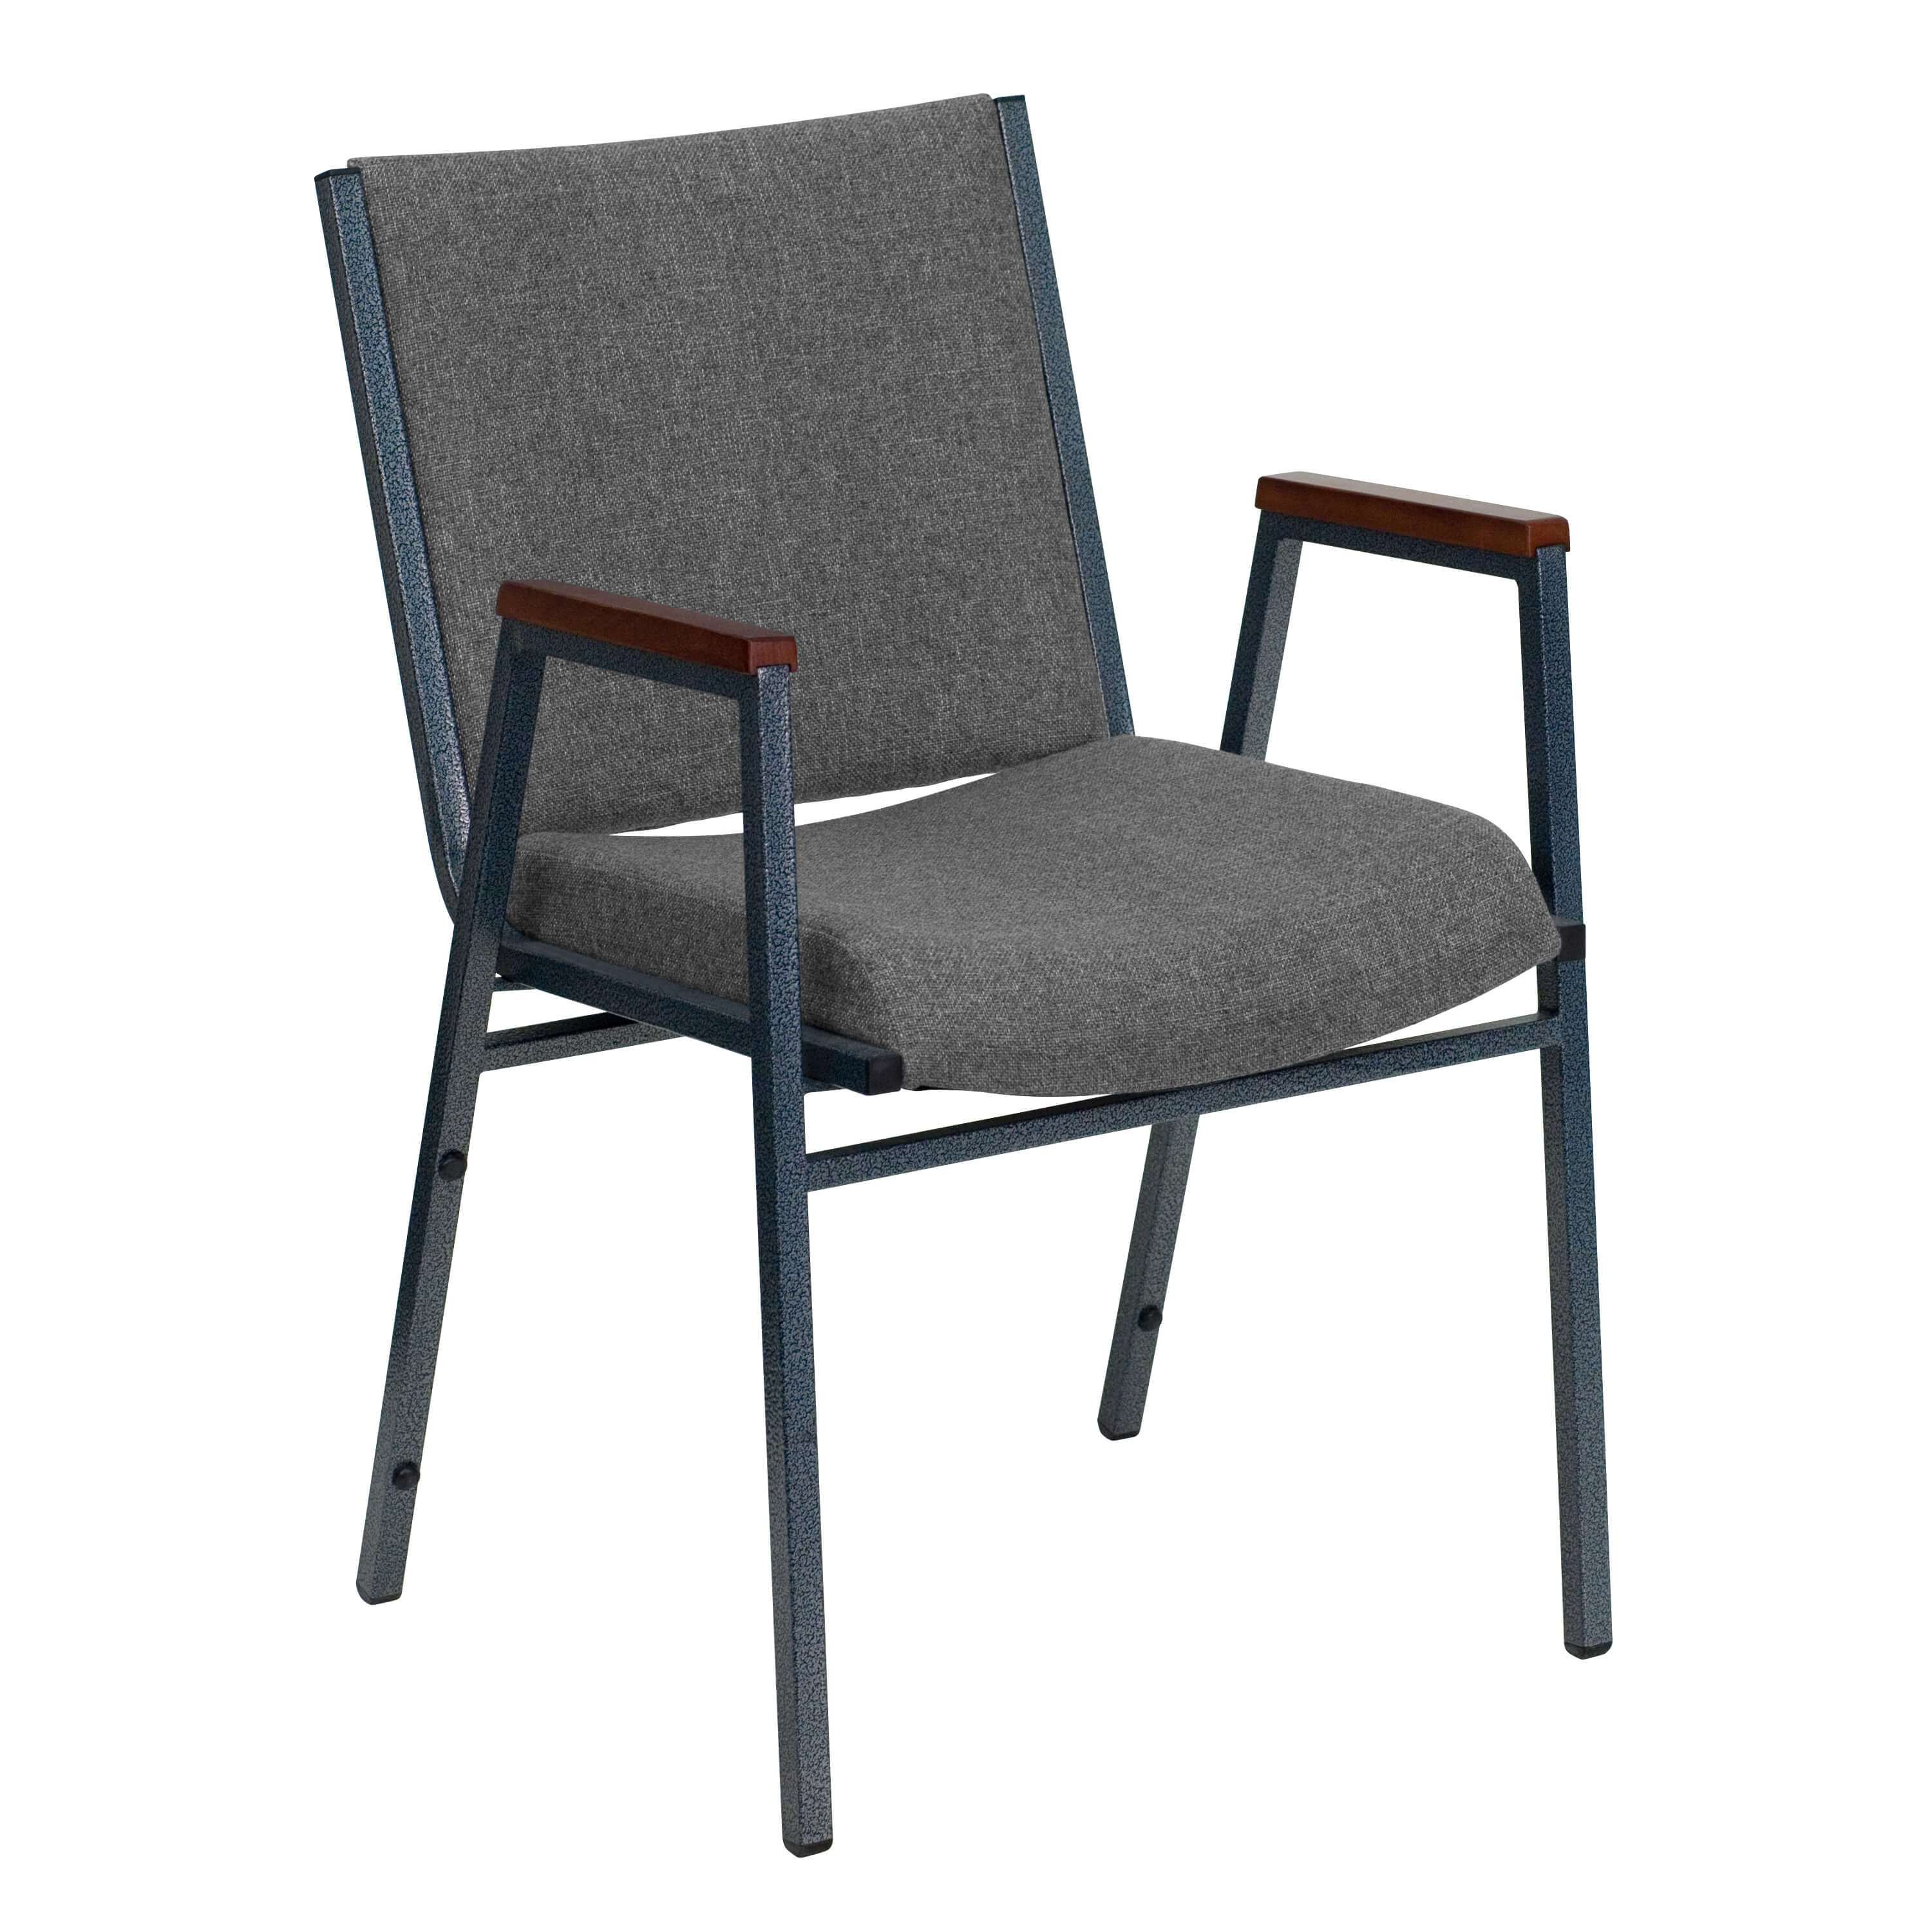 Stackable chairs CUB XU 60154 GY GG FLA